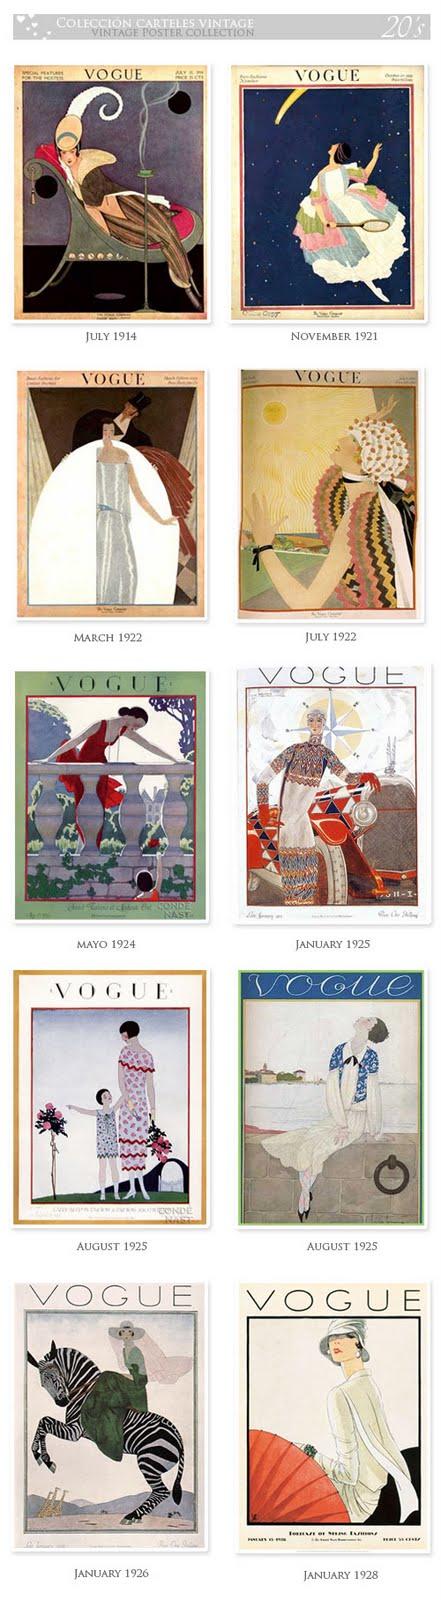 Vintage Vogue & Spanish illustrator.